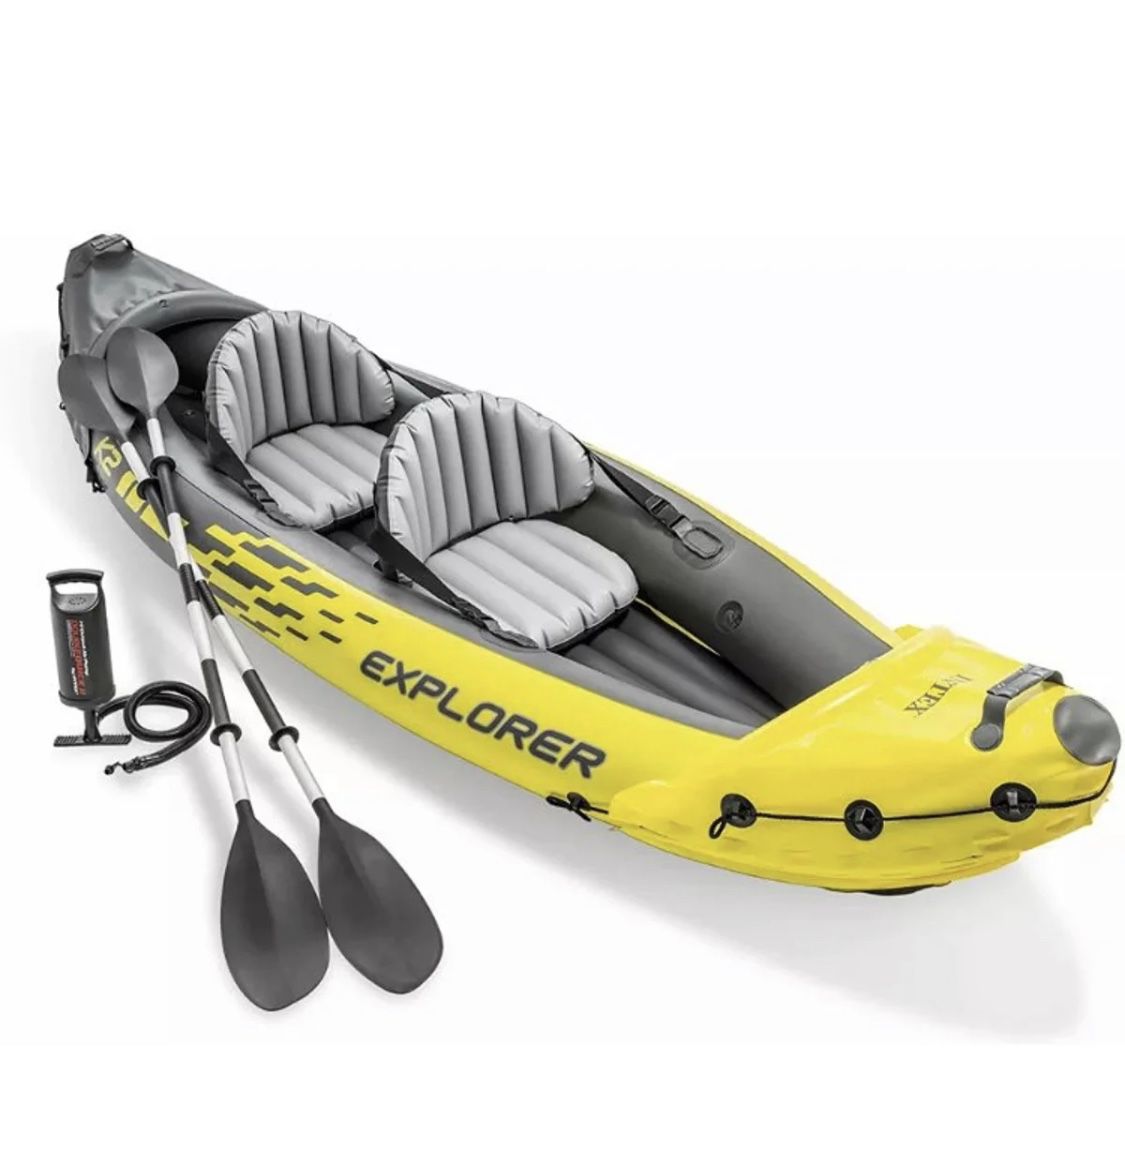 Intex K2 Challenger Inflatable Kayak